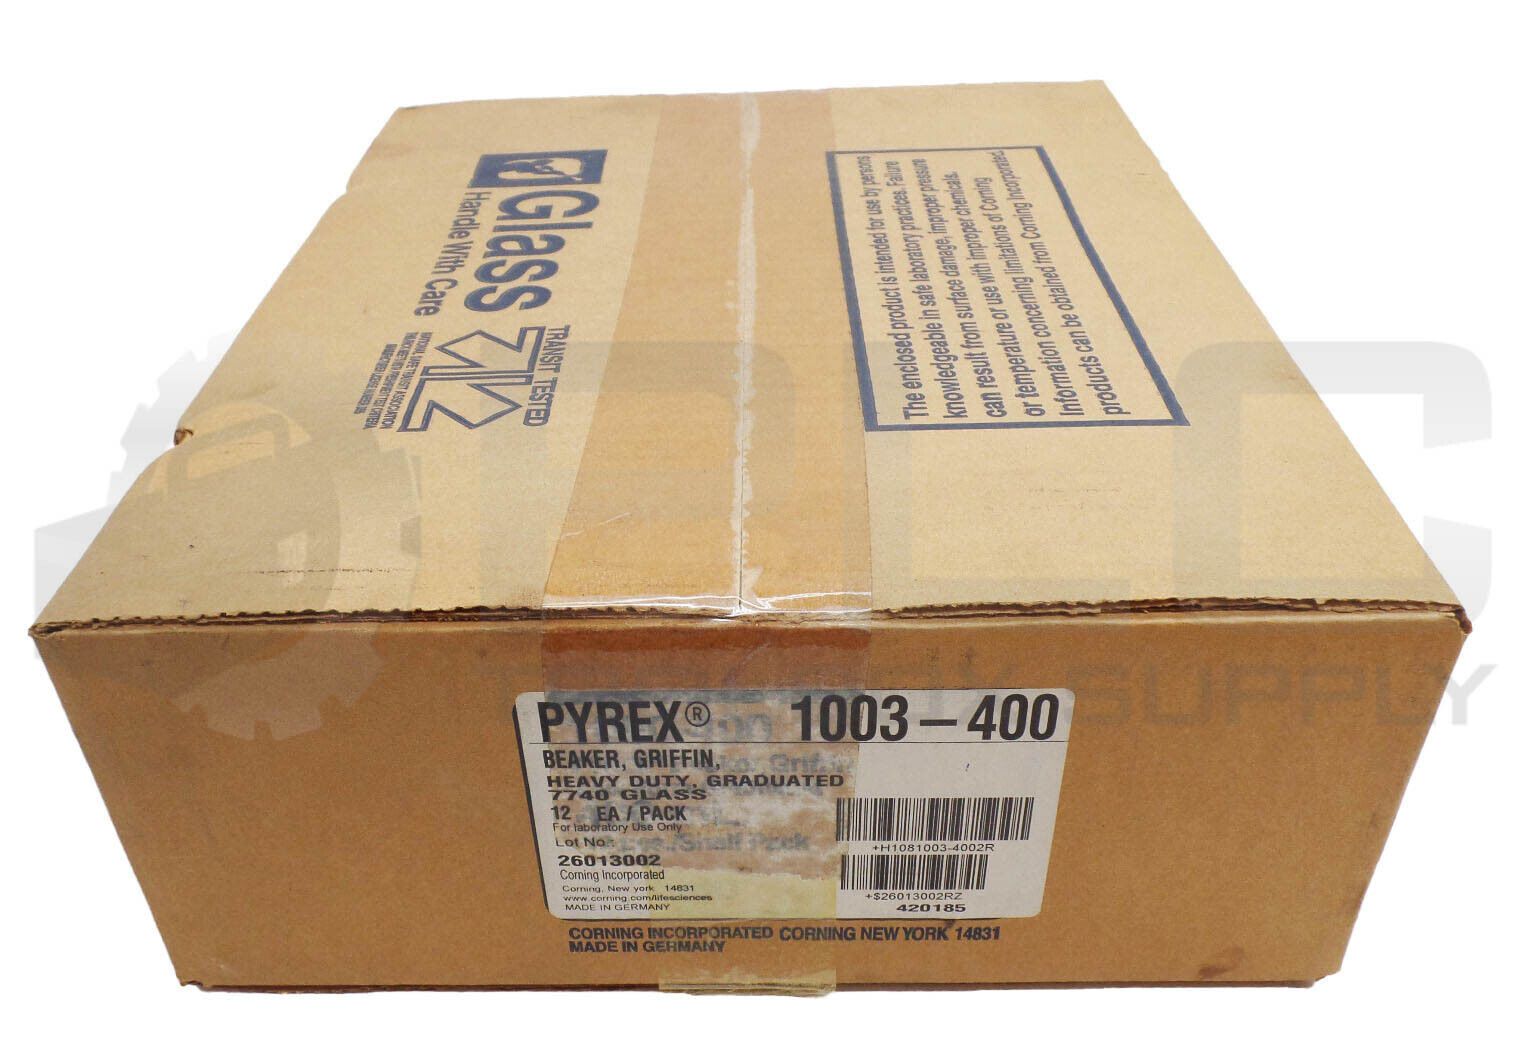 SEALED NEW BOX OF 12 PYREX 1003-400 GRIFFIN BEAKER HEAVY DUTY GRADULATED 400mL